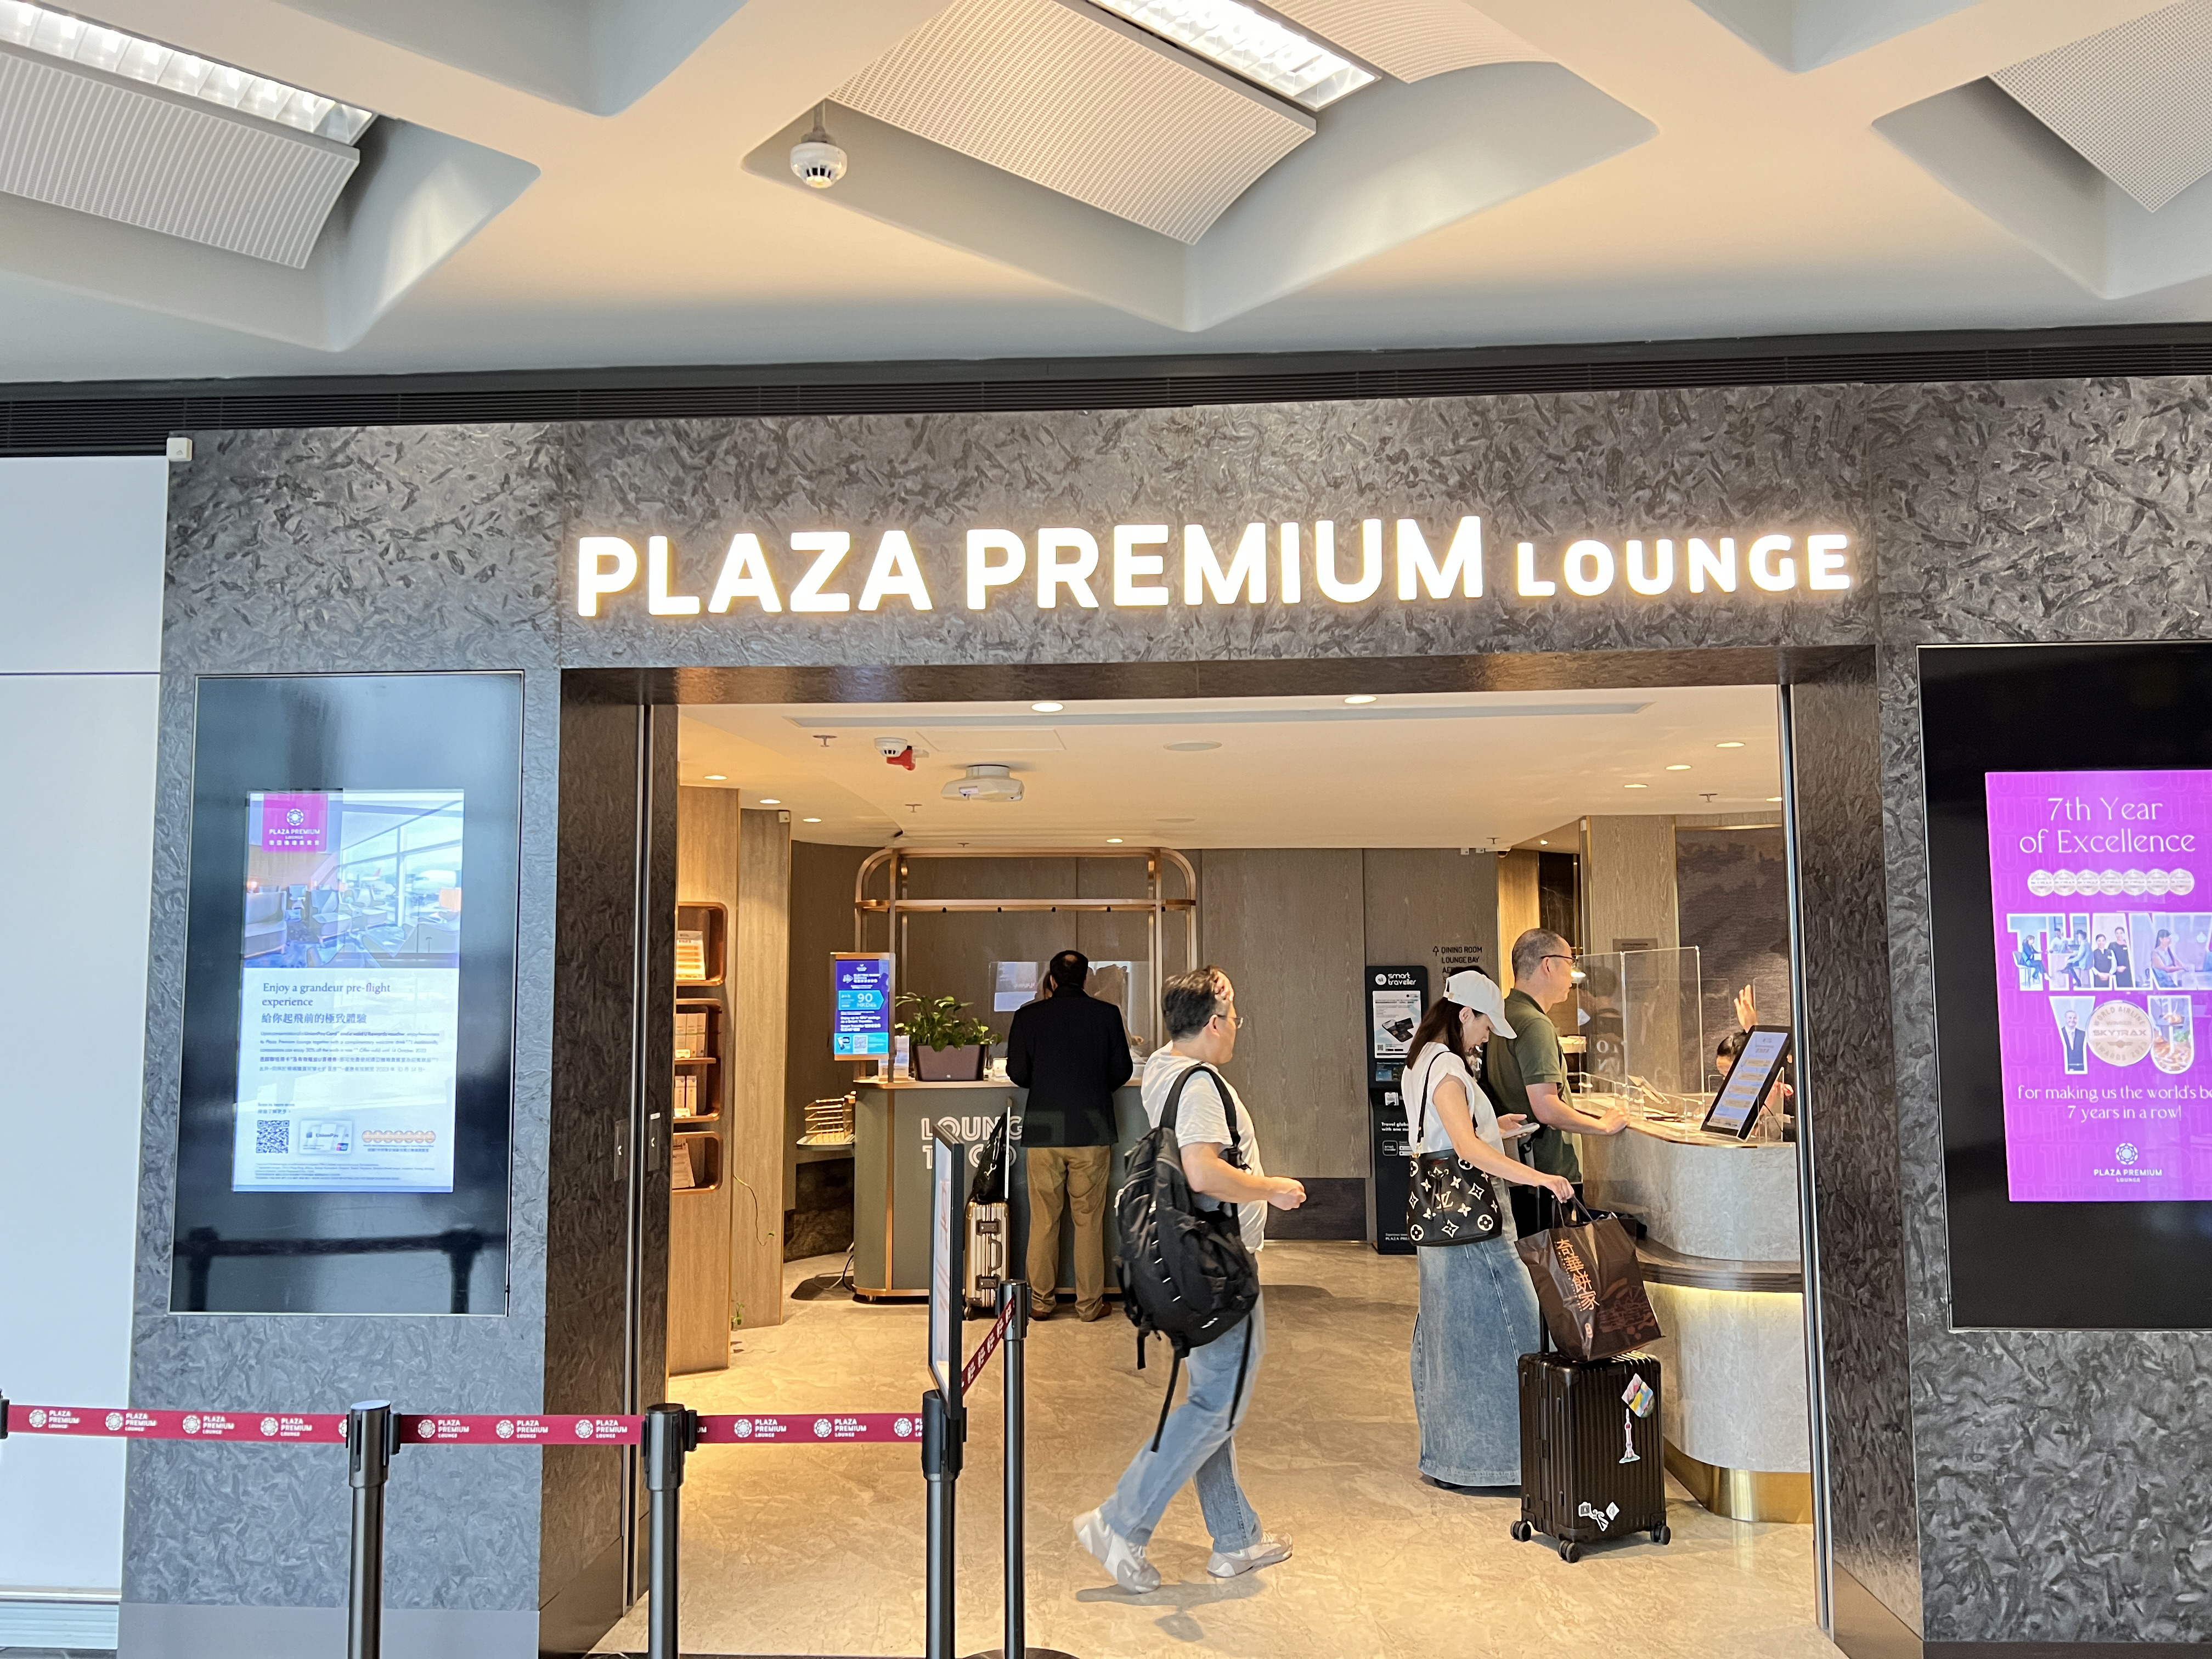 ۹ʻ Plaza Premium Lounge ھ 